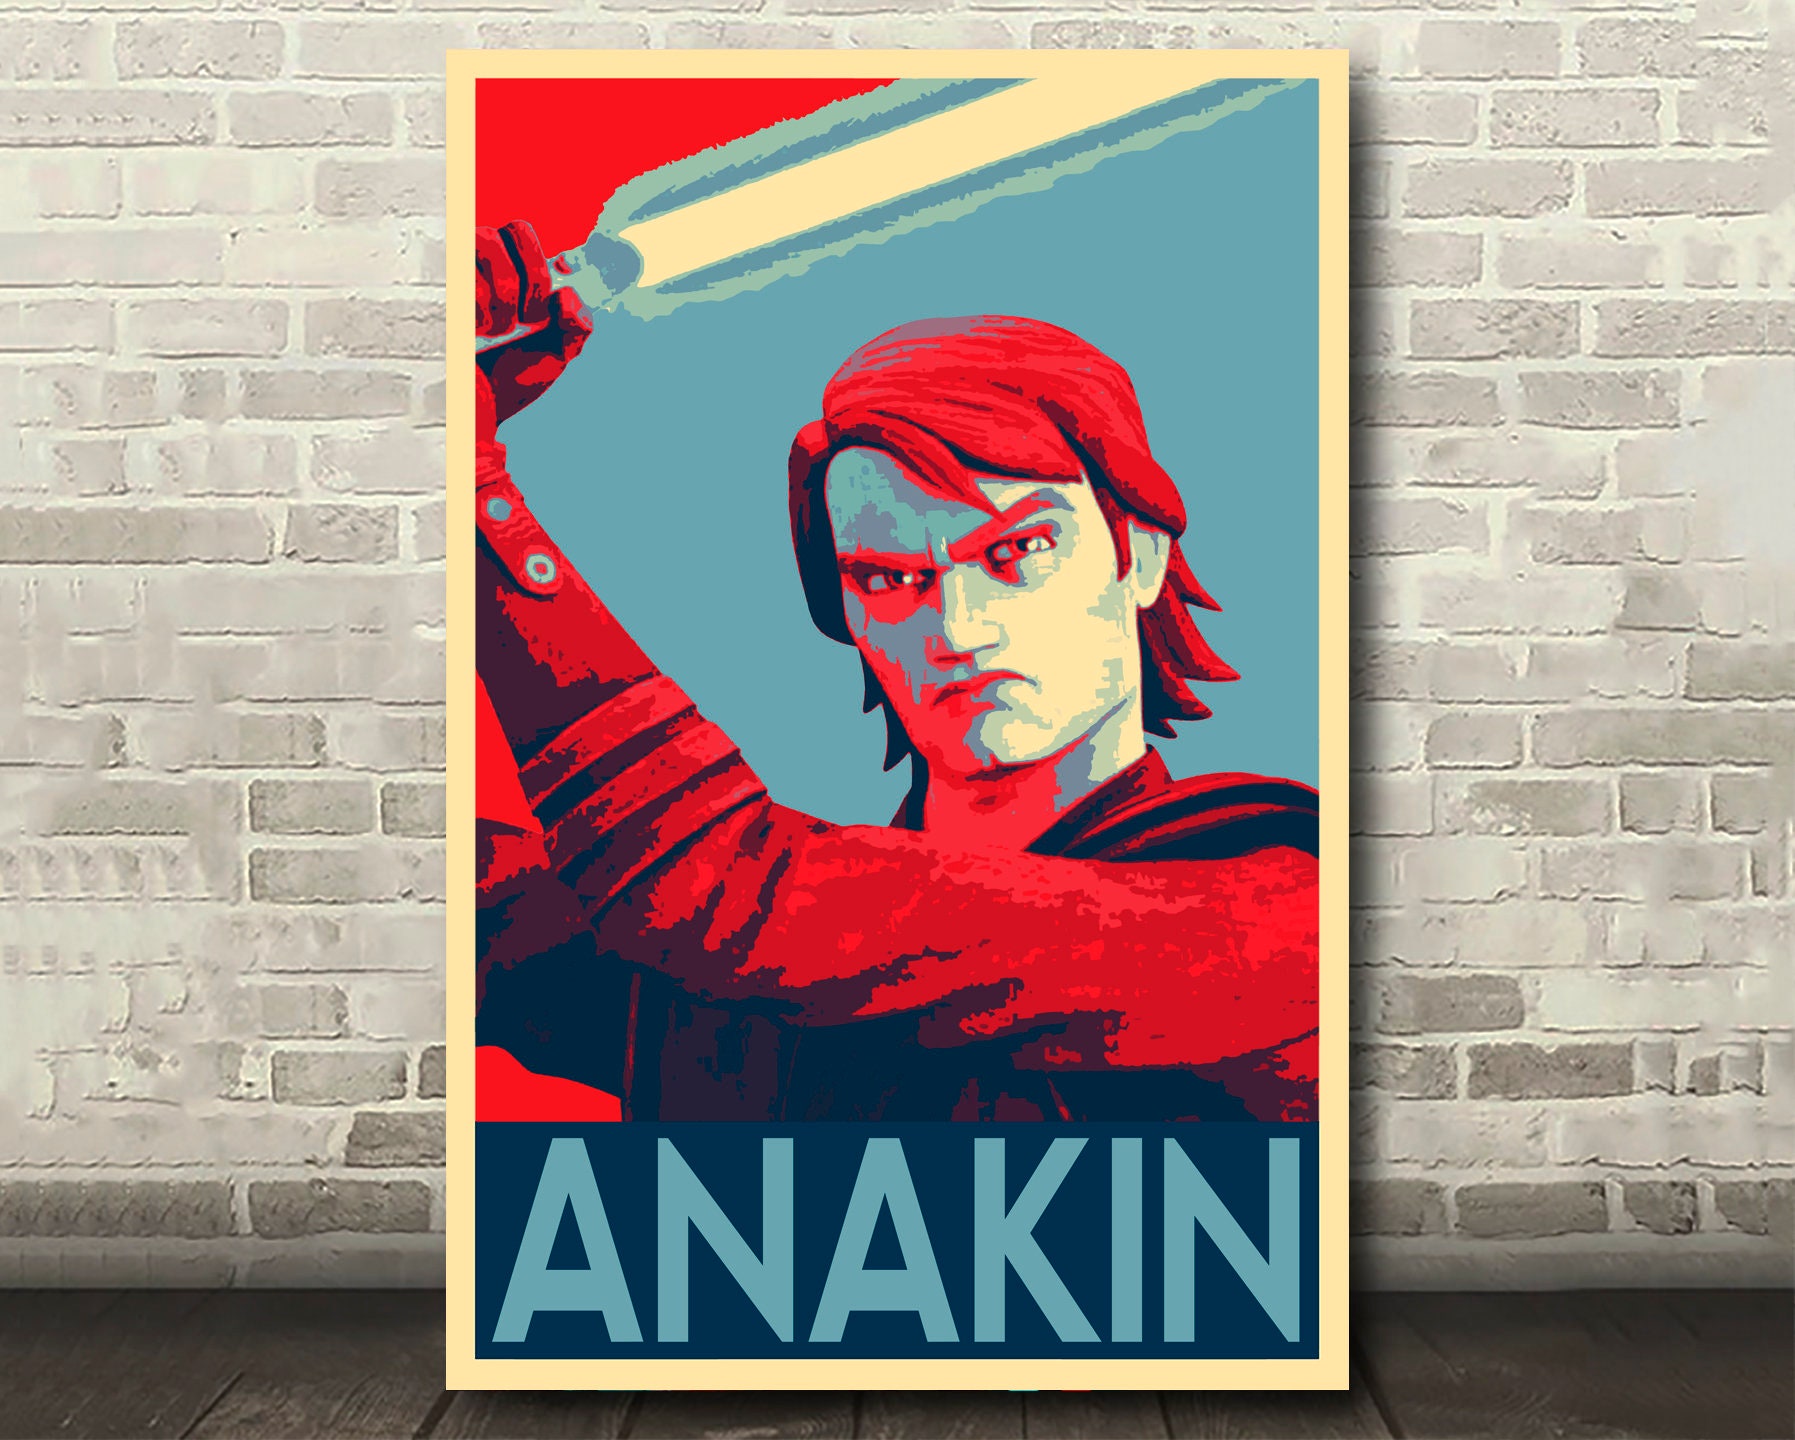 Anakin Skywalker Pop Art Illustration - Star Wars Clone Wars Home Decor in Poster Print or Canvas Art